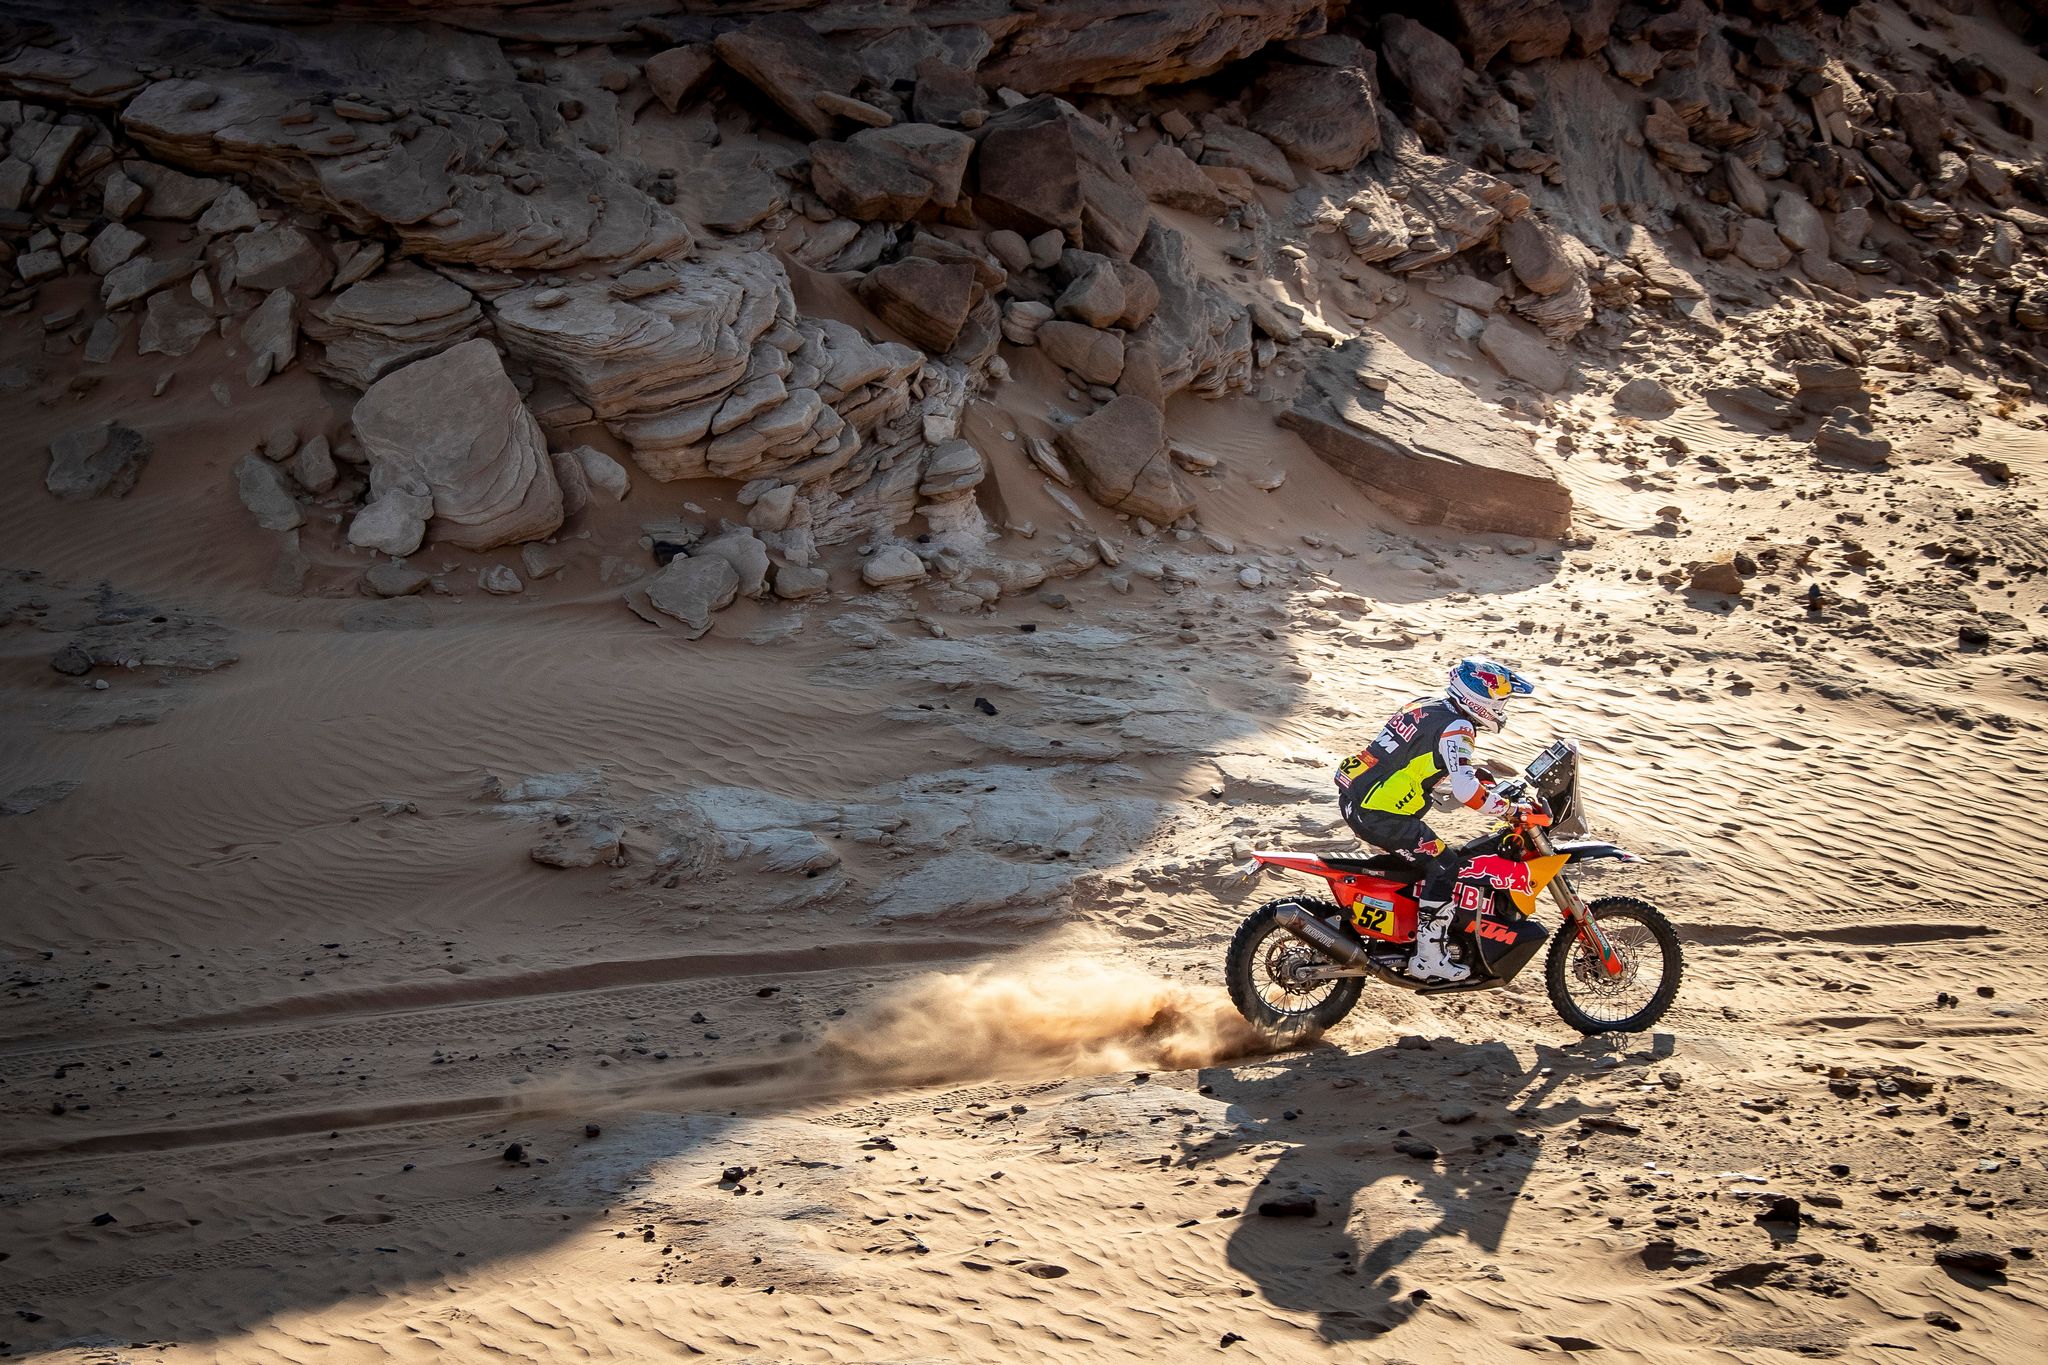 Matthias Walkner Red Bull KTM Factory Racing 2022 Dakar Rally